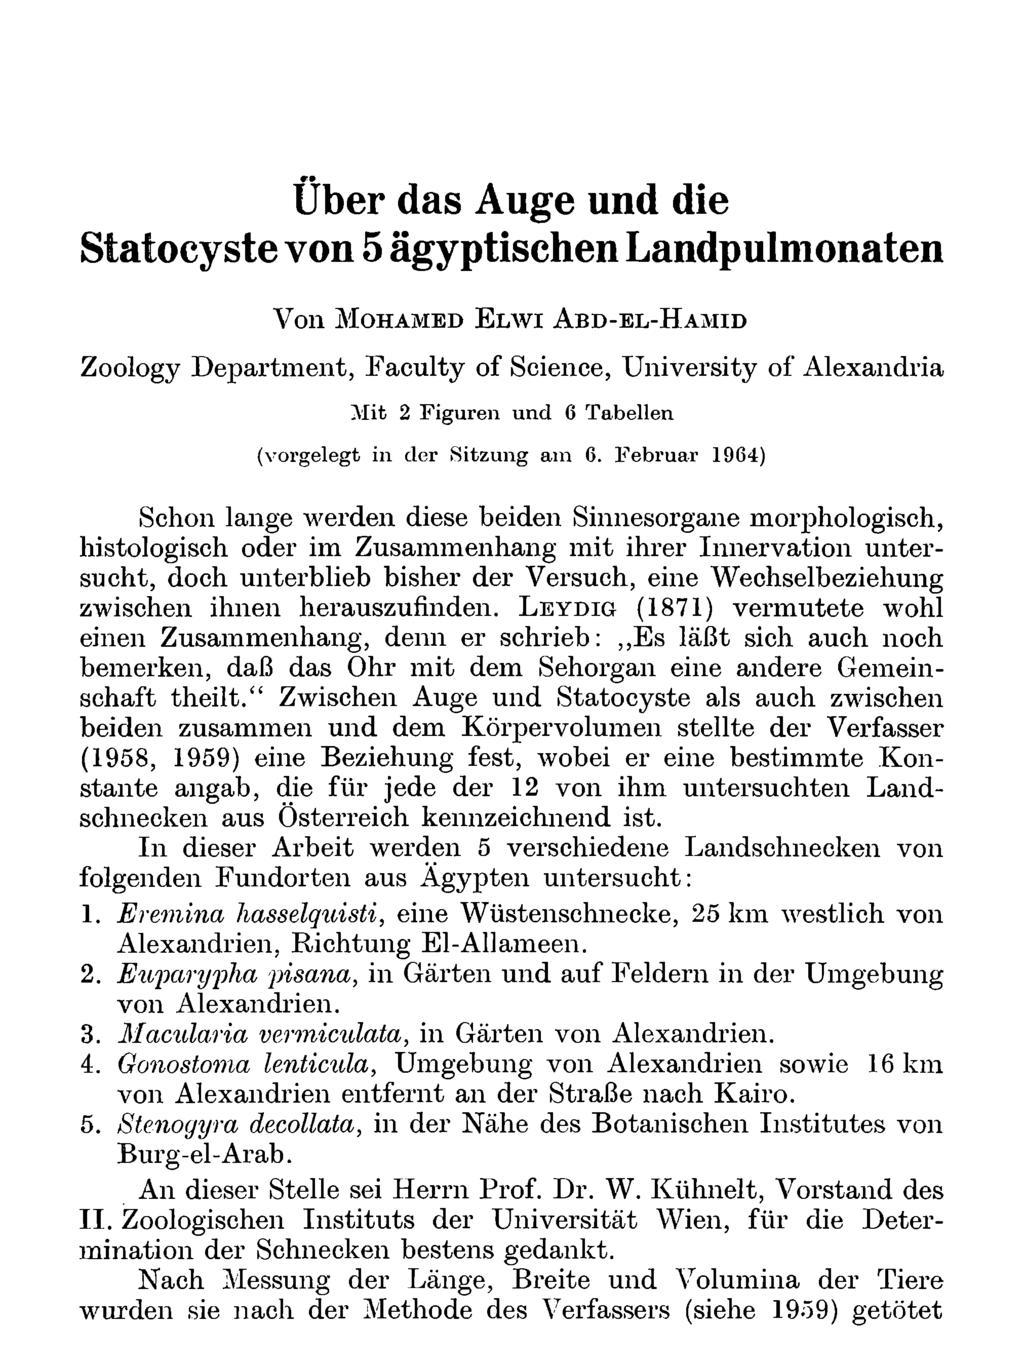 Akademie d. Wissenschaften Wien; download unter www.biologiezentrum.